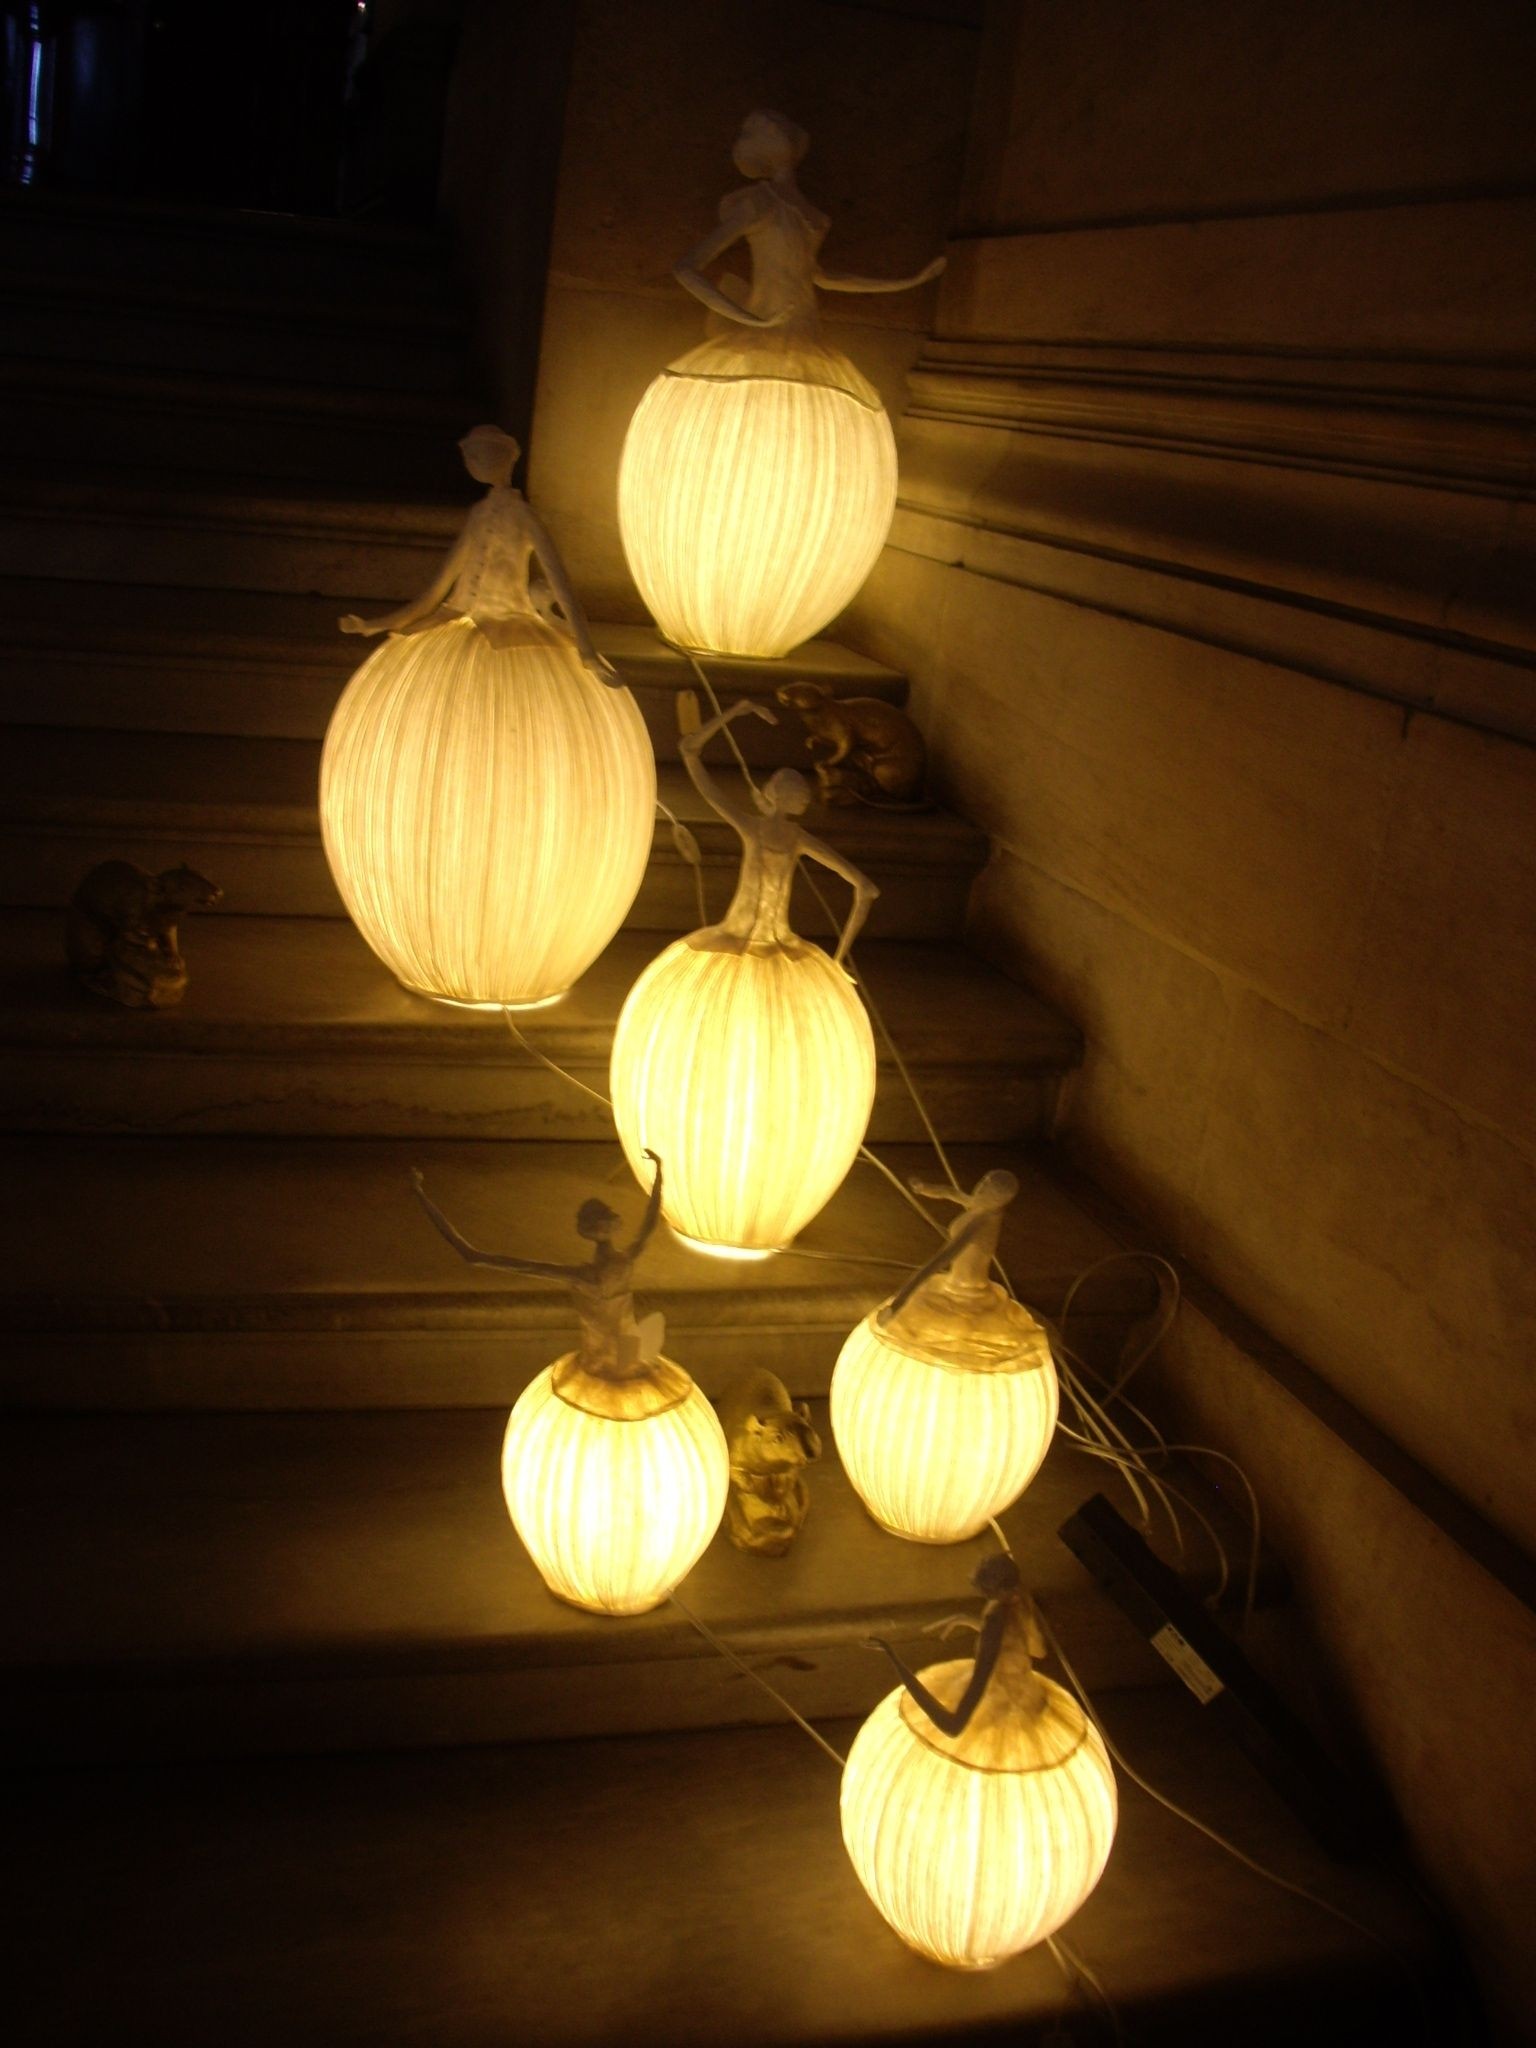 Ballerina lamps lamp paper lamp ceiling lights